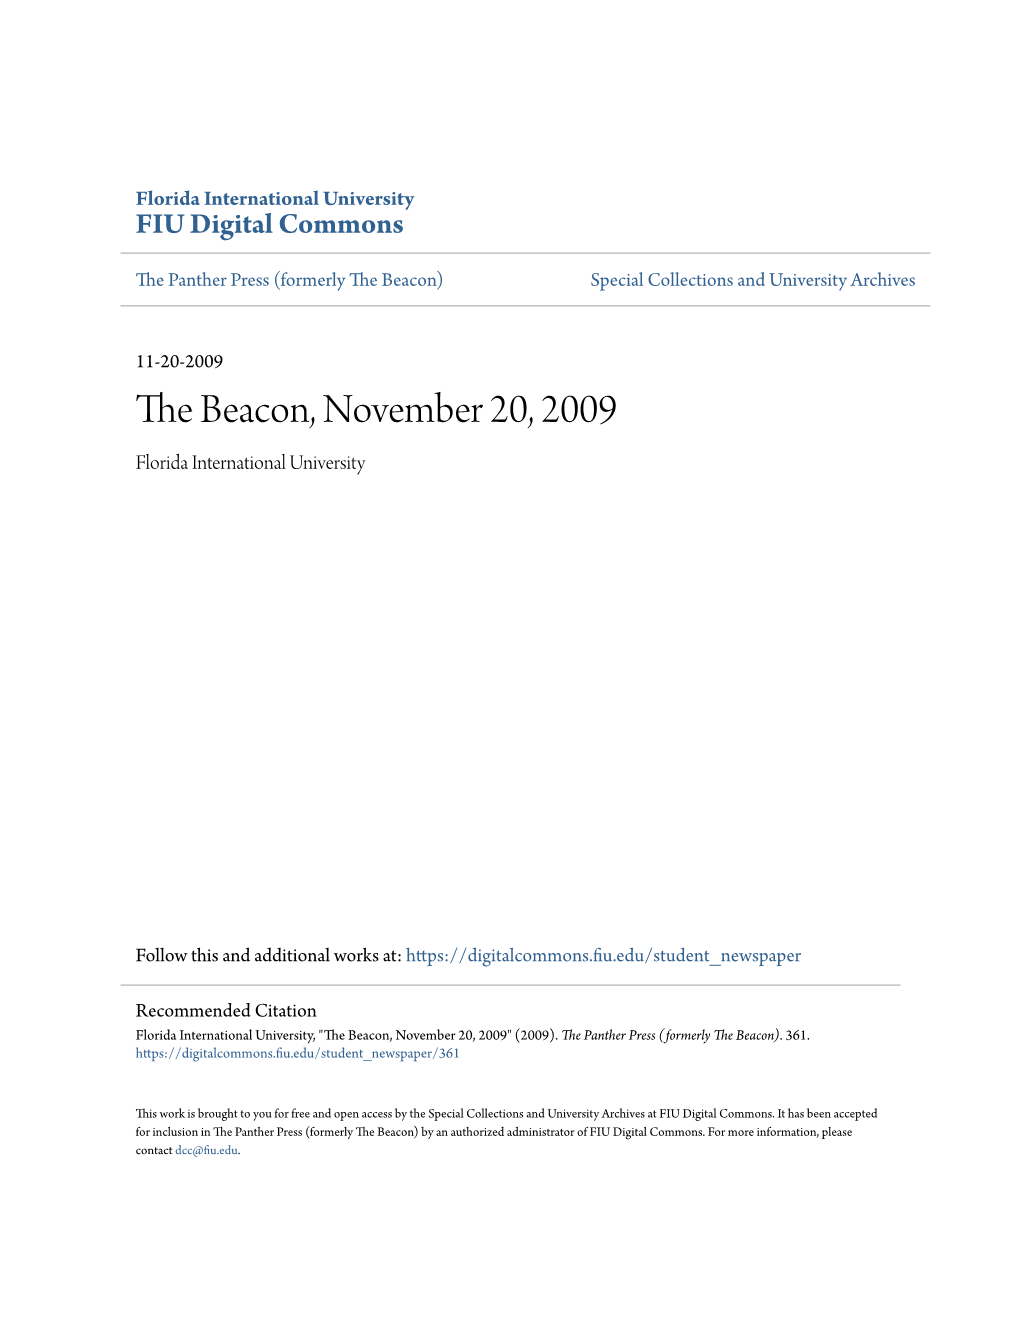 The Beacon, November 20, 2009 Florida International University